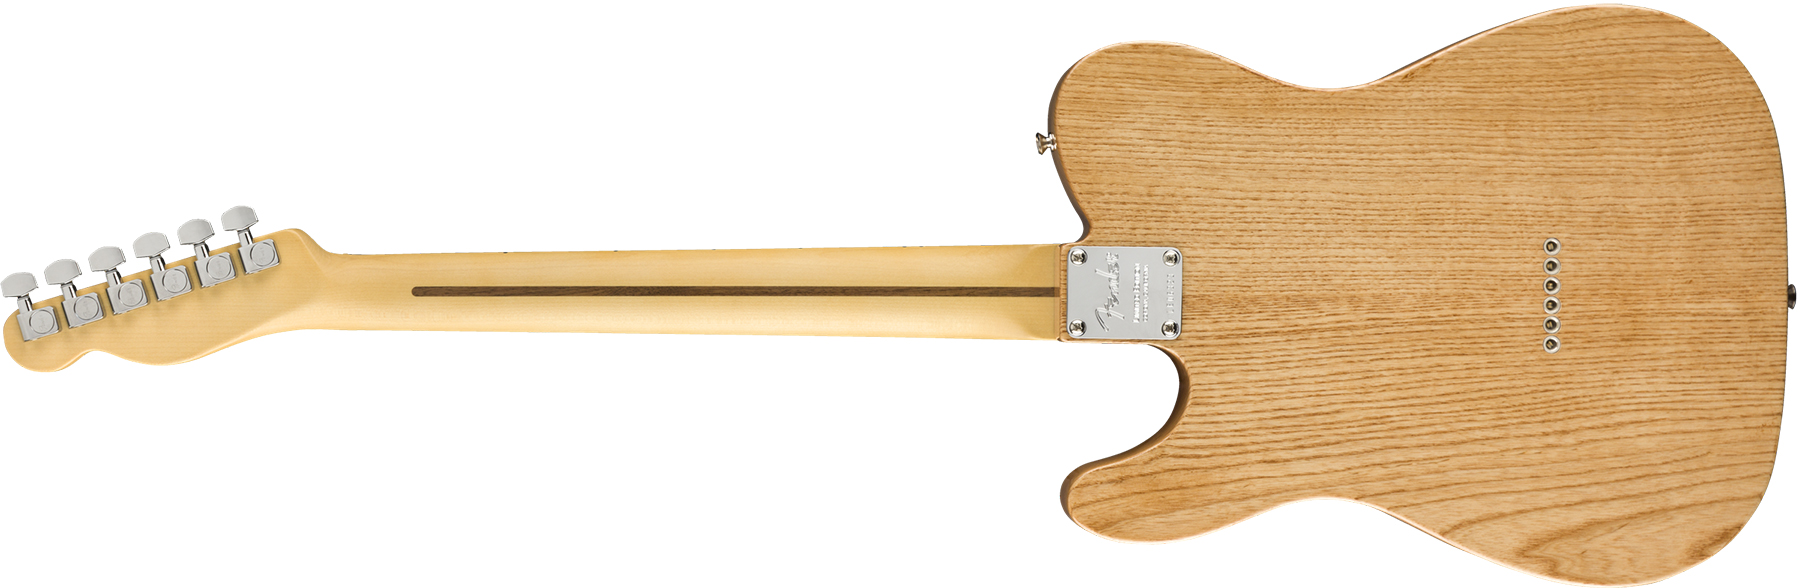 Fender Tele Quilt Maple Top Rarities Usa Mn - Blue Cloud - Guitarra eléctrica con forma de tel - Variation 1